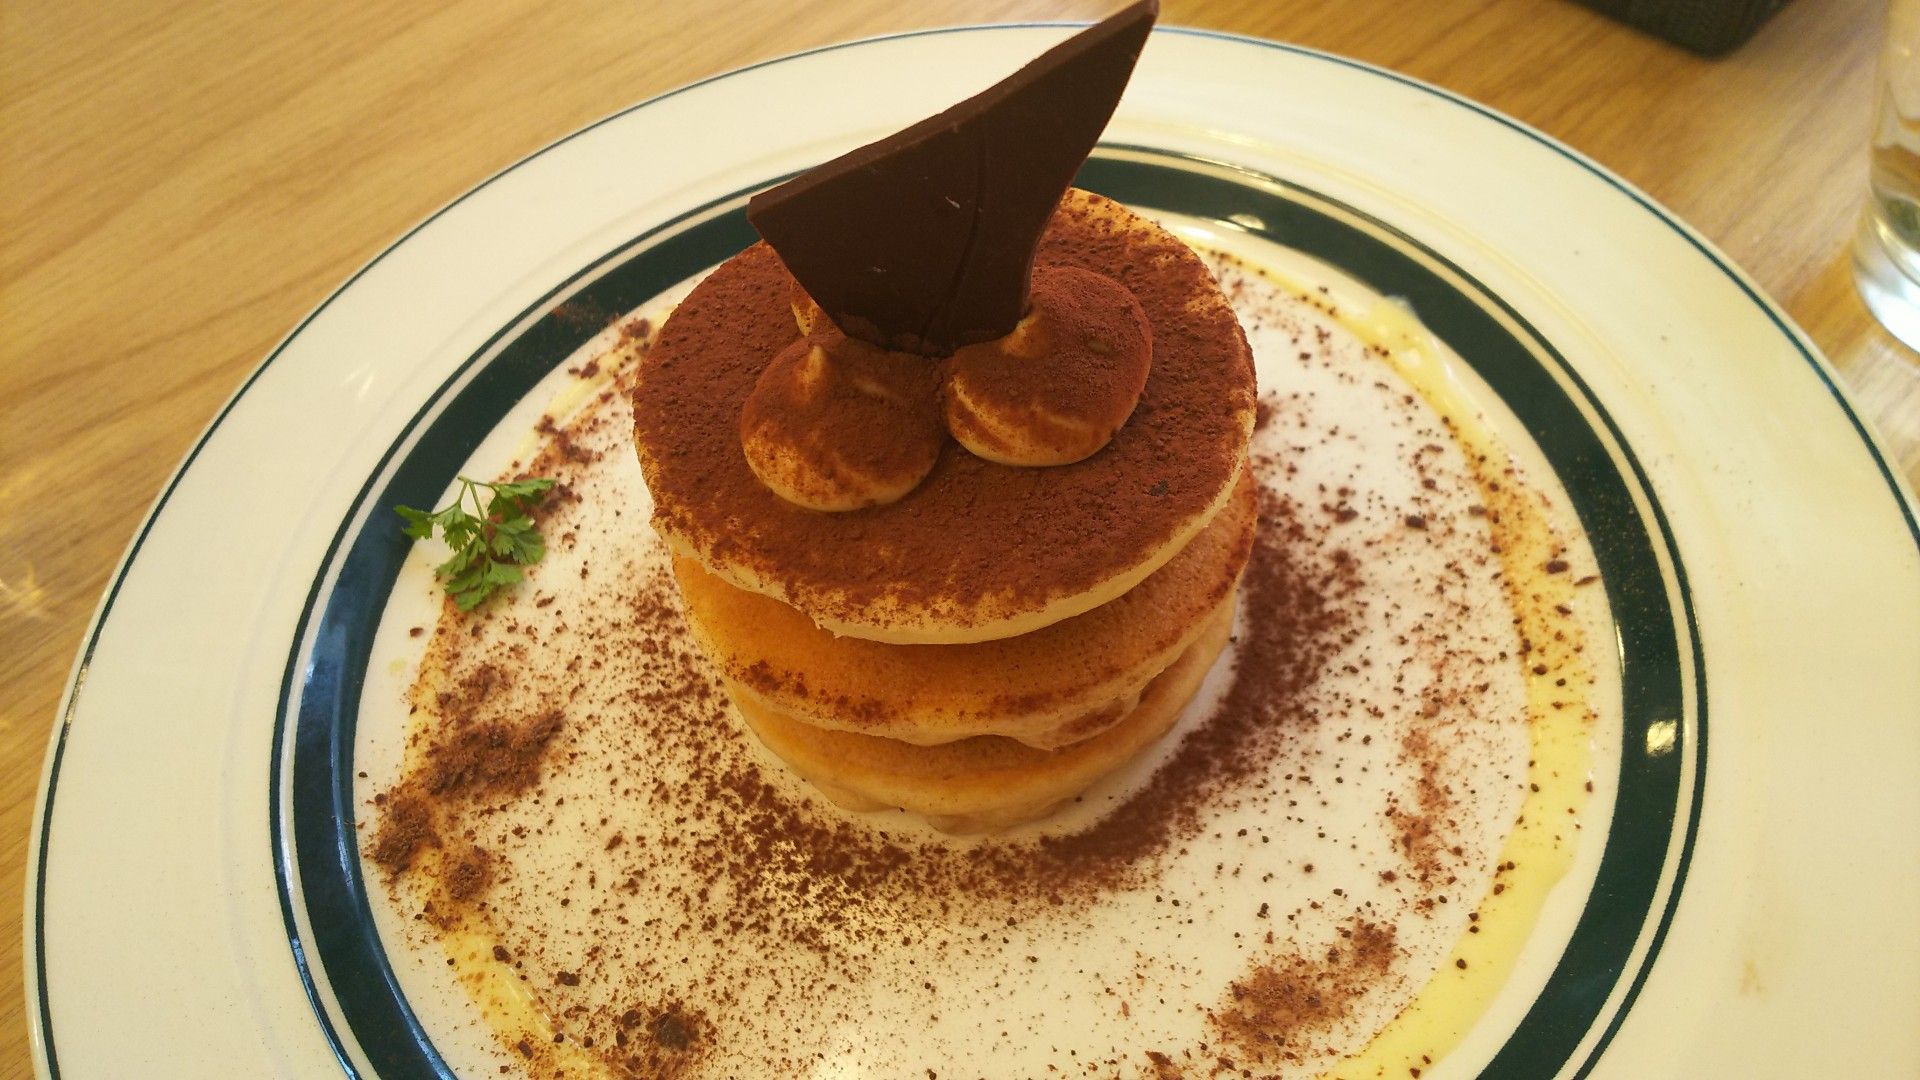 Cafe Pancake Gram 鹿児島店 もものためいき 楽天ブログ